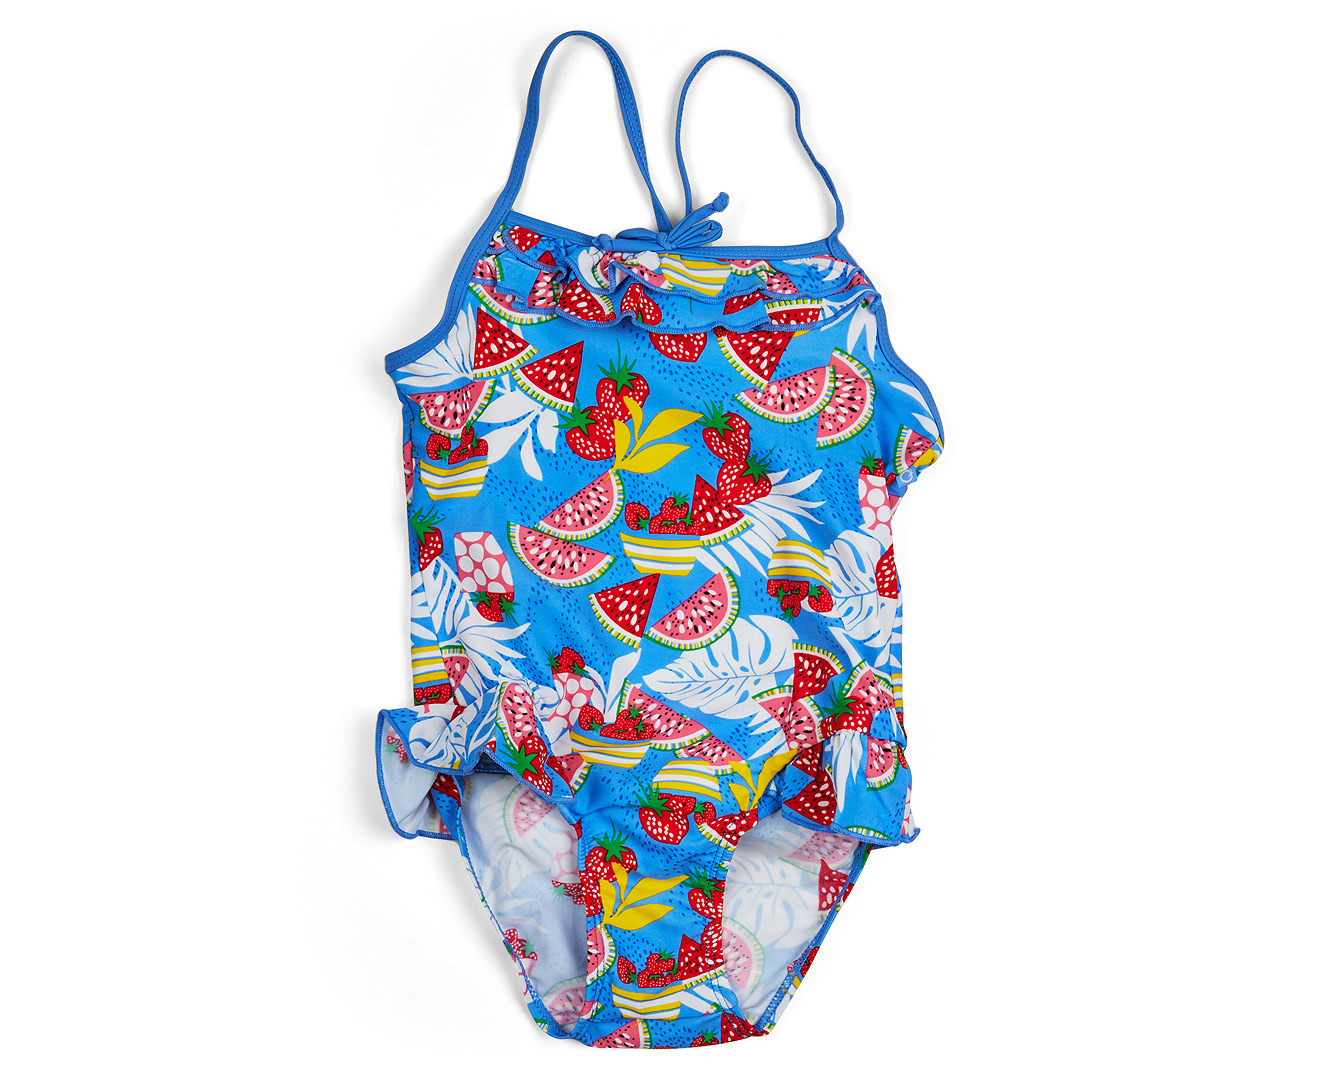 Plum Girls' Swimsuit - Fruit | Mumgo.com.au